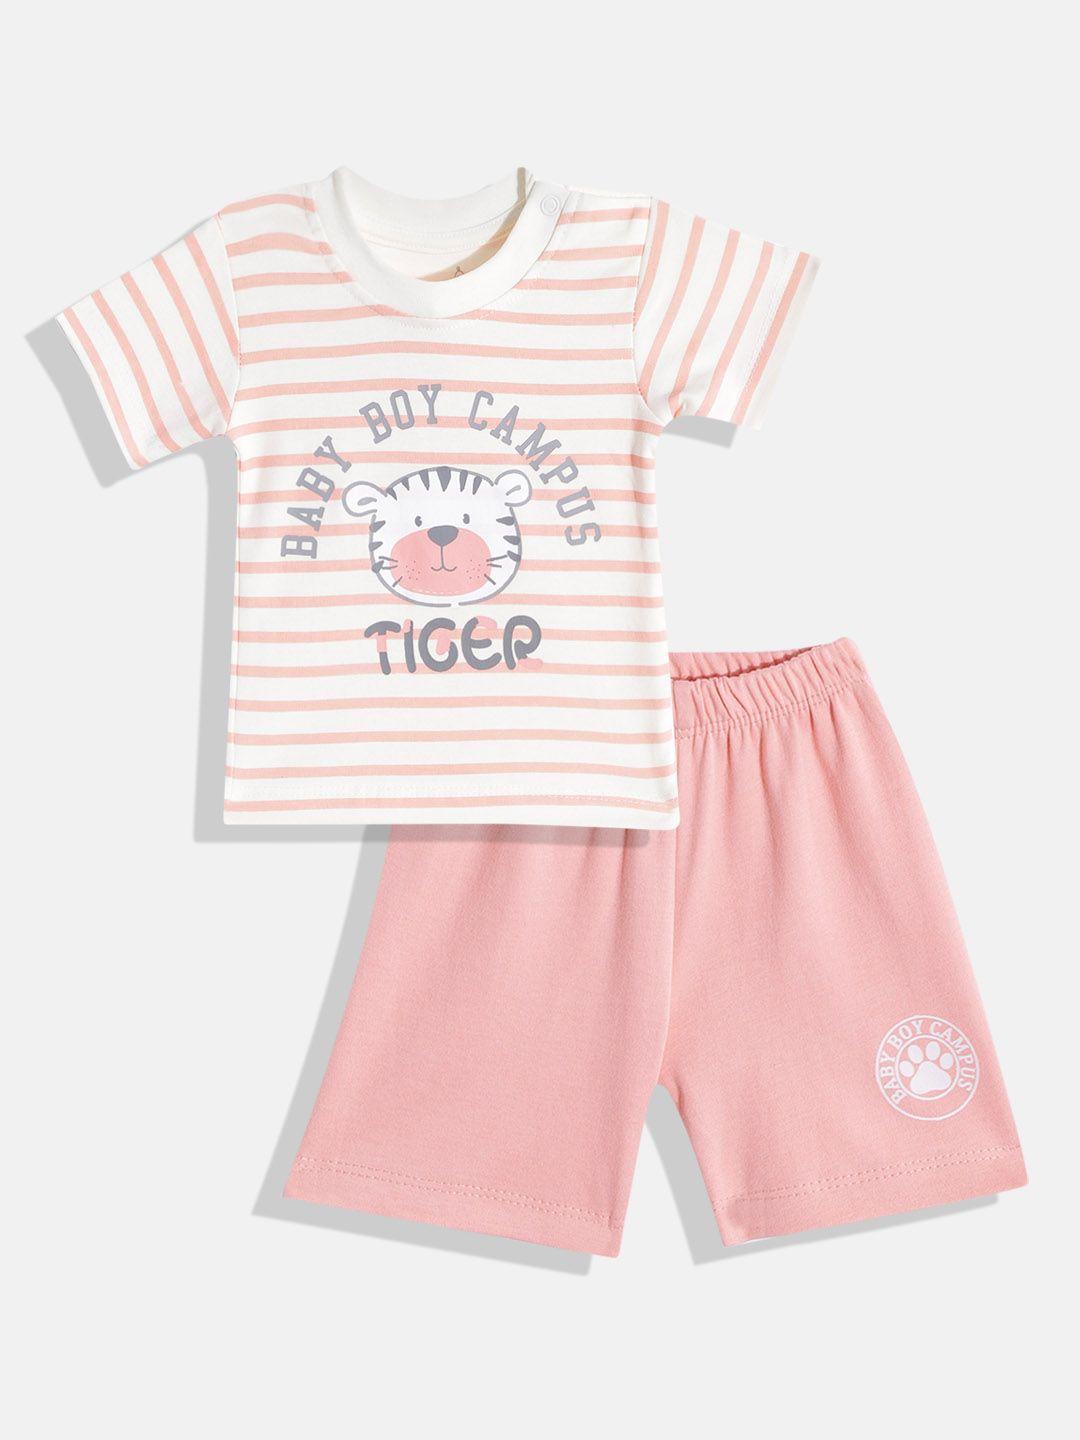 tinyo-infant-boys-cream-coloured-&-peach-coloured-striped-cotton-clothing-set